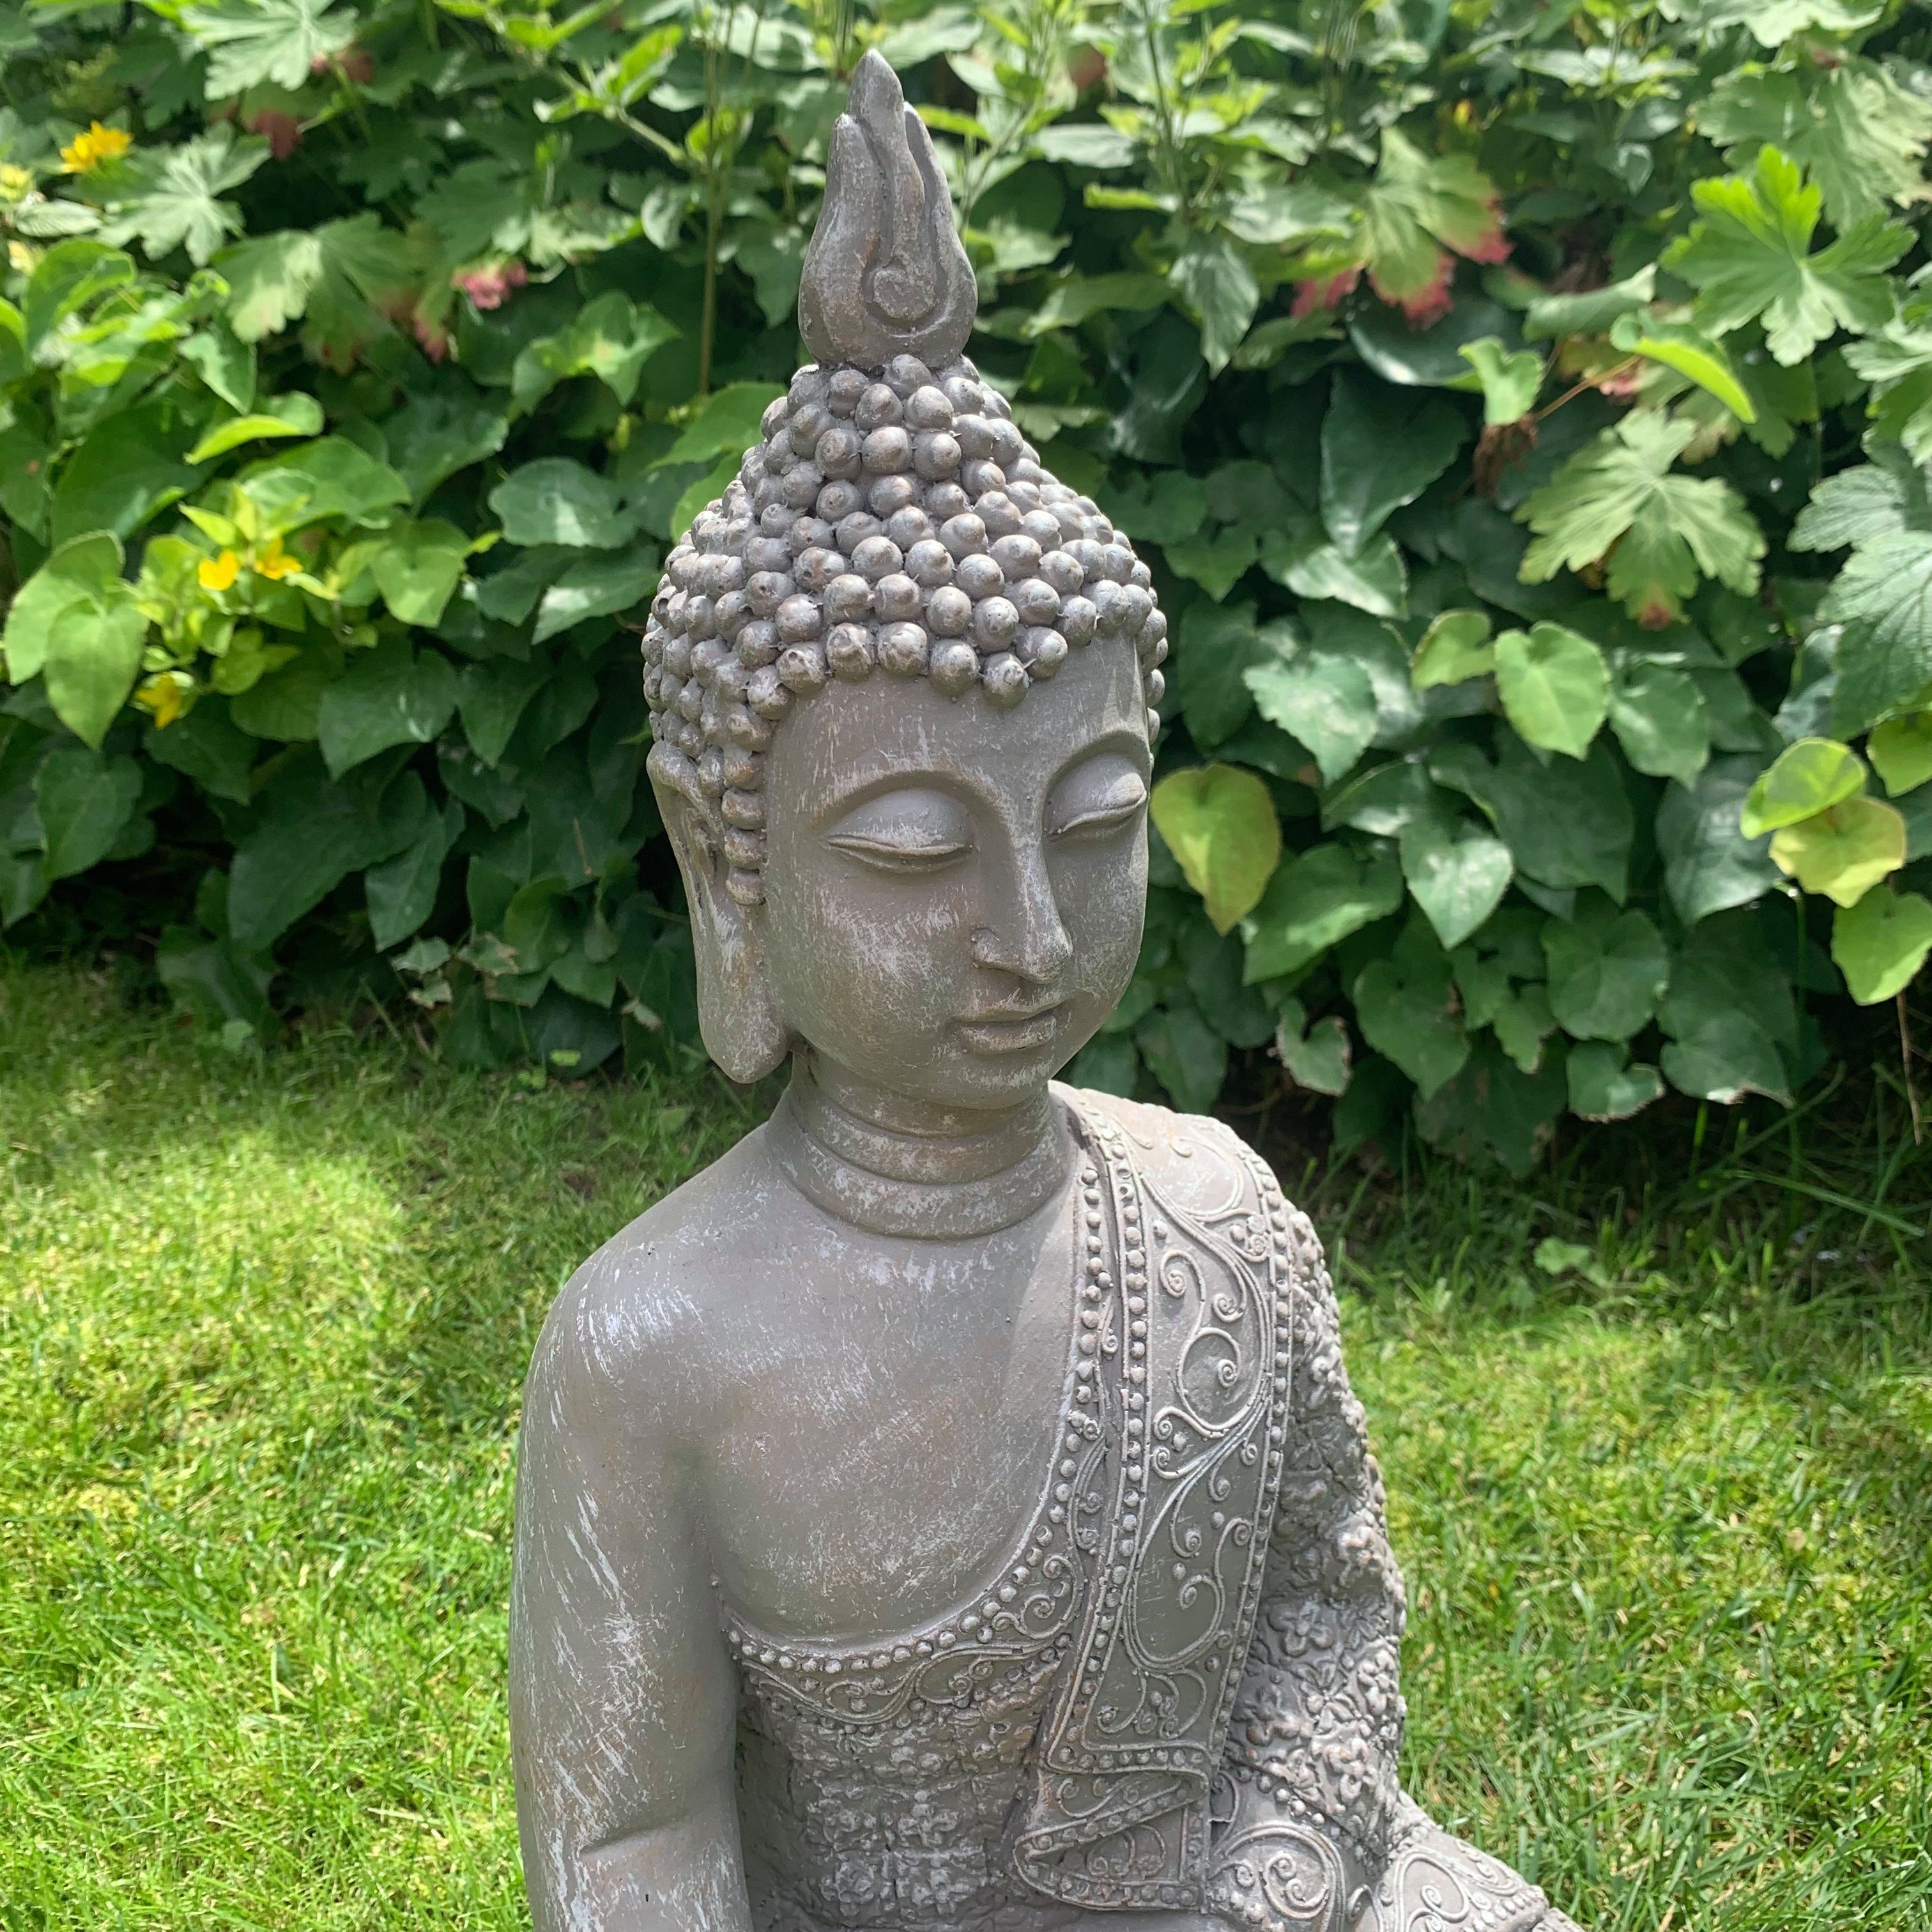 45cm (1, Art Buddha Shui K&L Deko Thai Statue Steinfigur Beton Wellness Wall Gartendeko Buddhafigur Feng Gartenfigur), Kunststein große